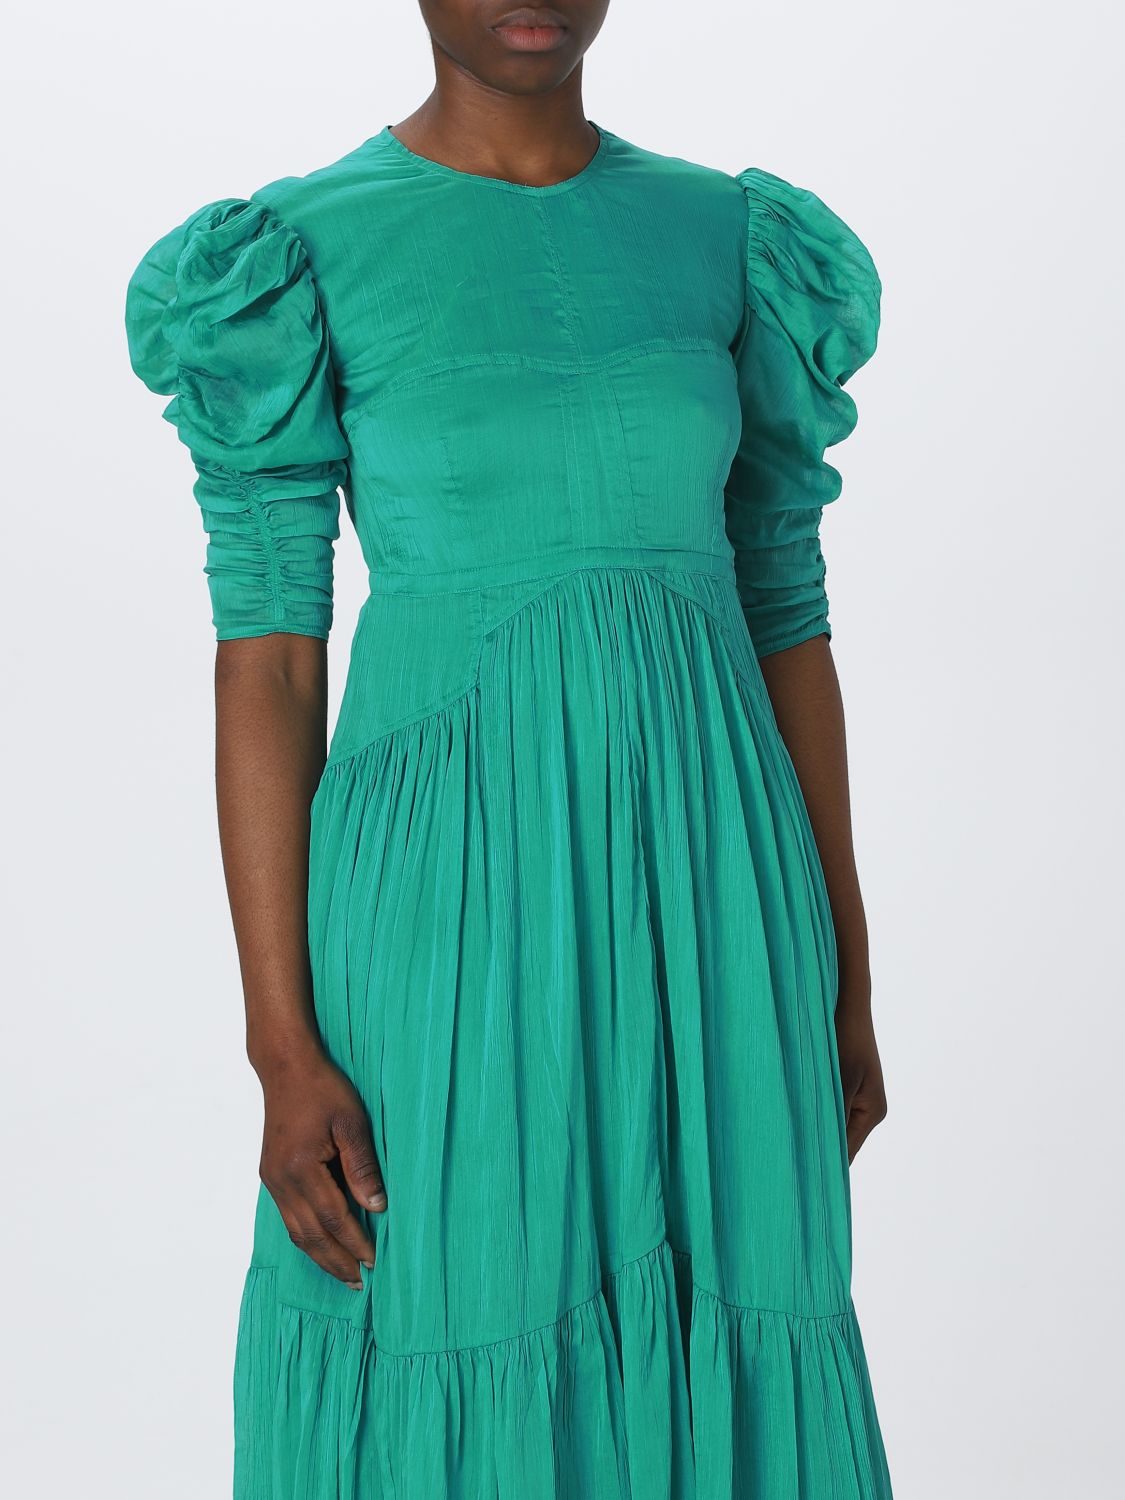 ISABEL MARANT: dress for woman - Green | Isabel Marant dress ...